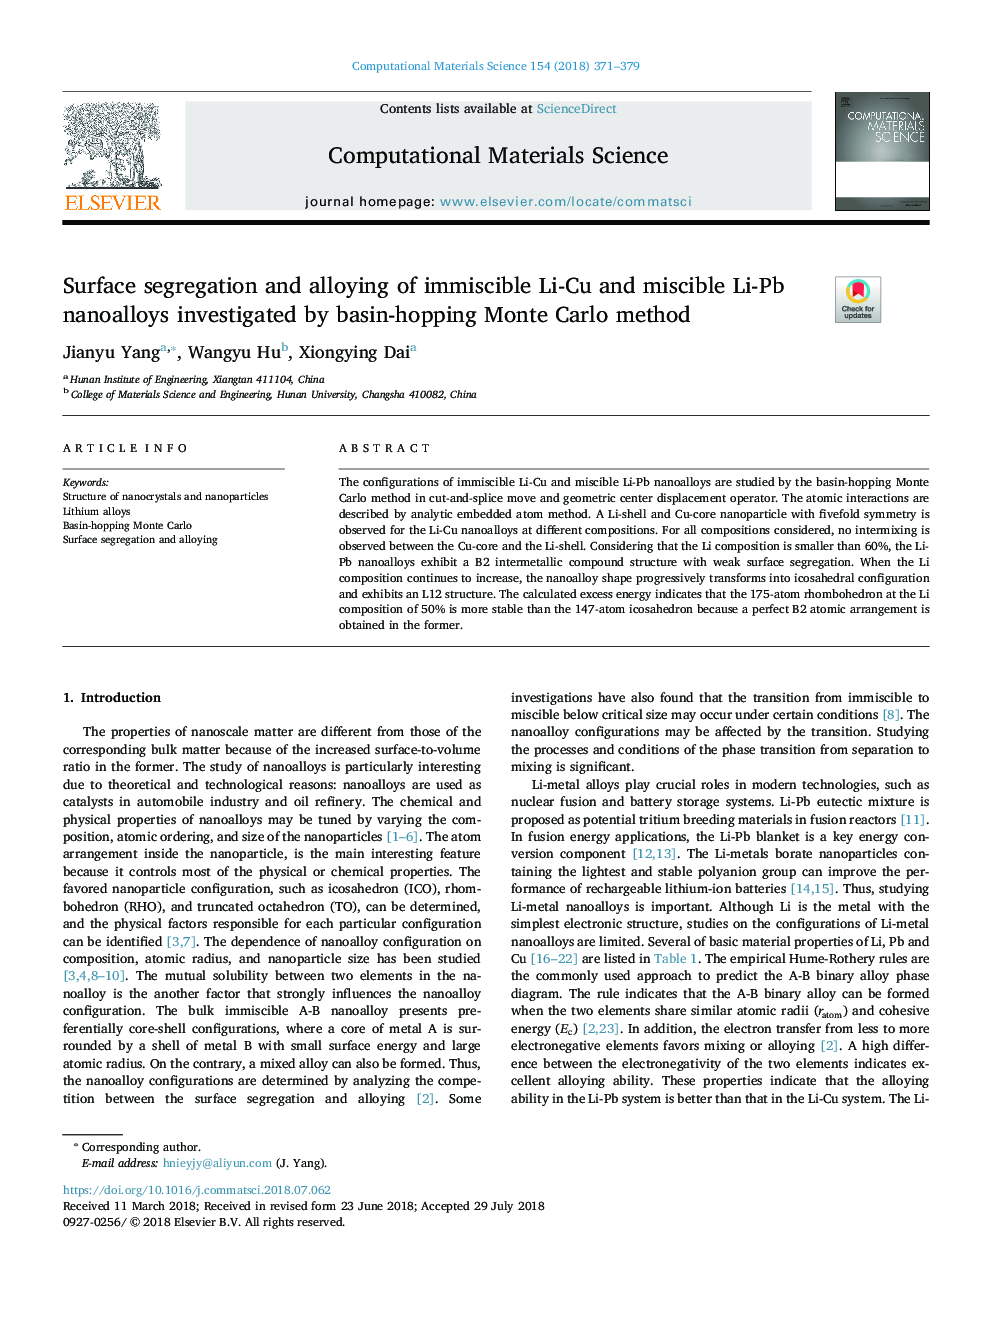 Surface segregation and alloying of immiscible Li-Cu and miscible Li-Pb nanoalloys investigated by basin-hopping Monte Carlo method